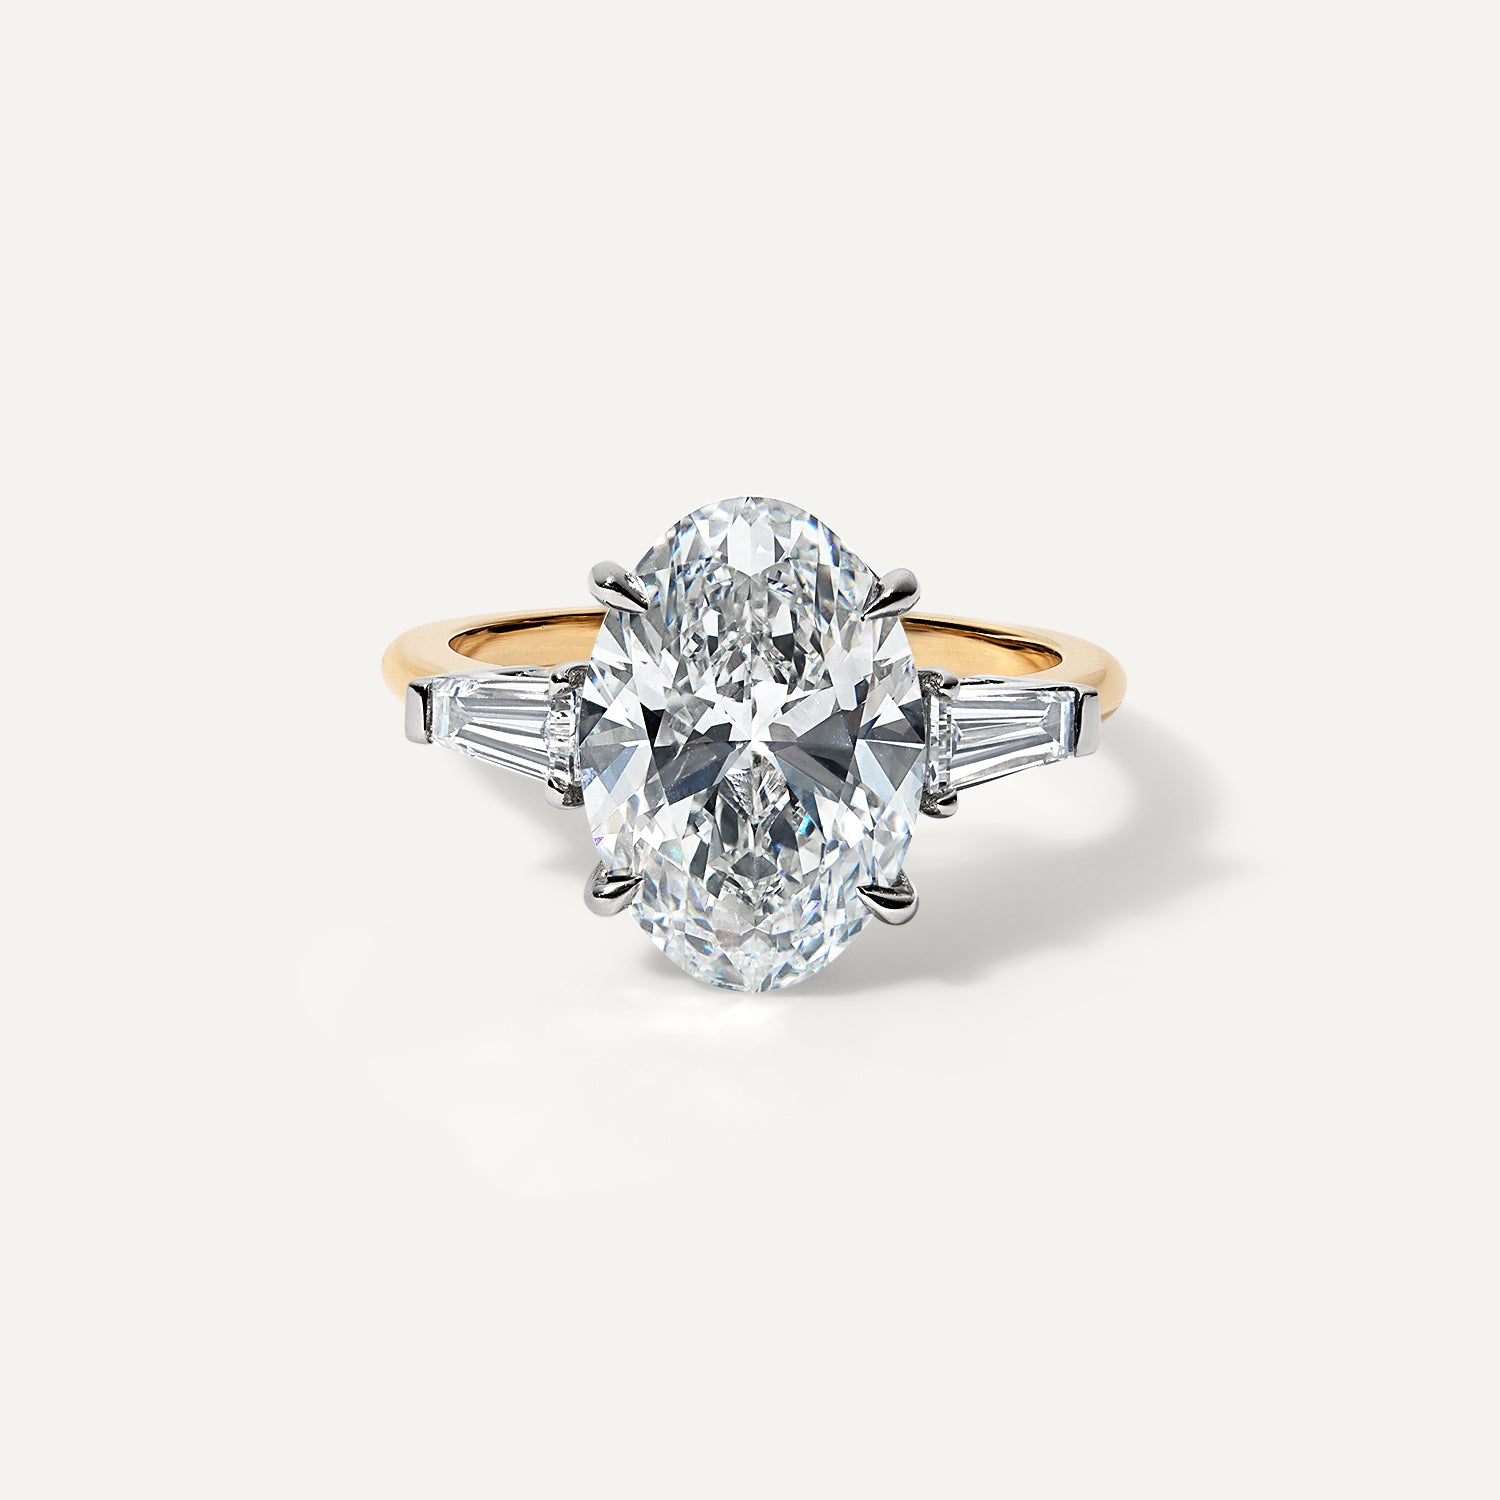 Oval three stone lab diamond engagement ring.